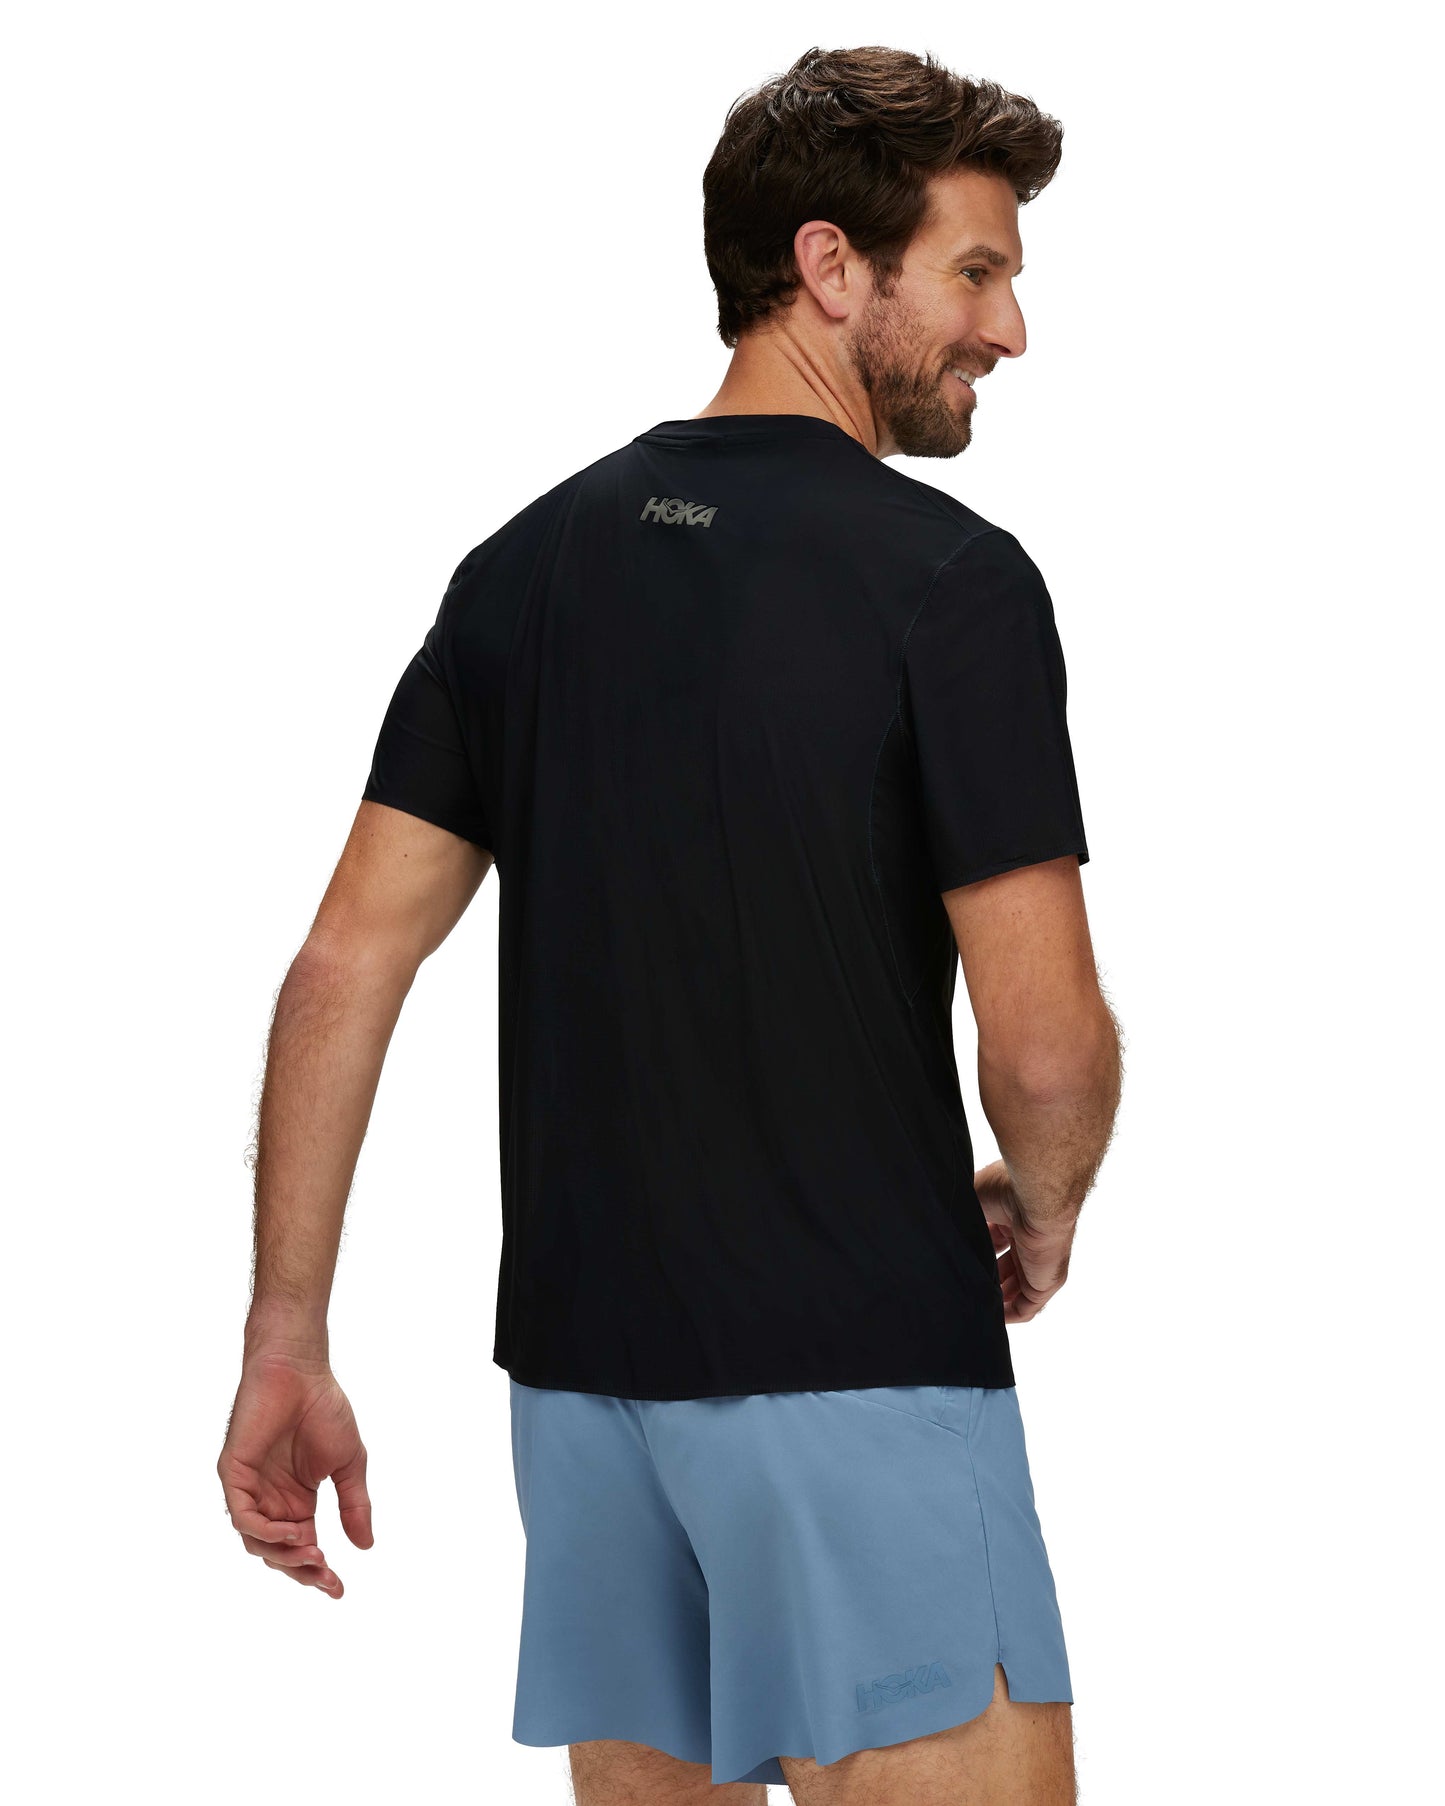 M AIROLITE RUN SHORT SLEEVE - חולצת ריצה לגברים טי אירולייט - שרוול קצר